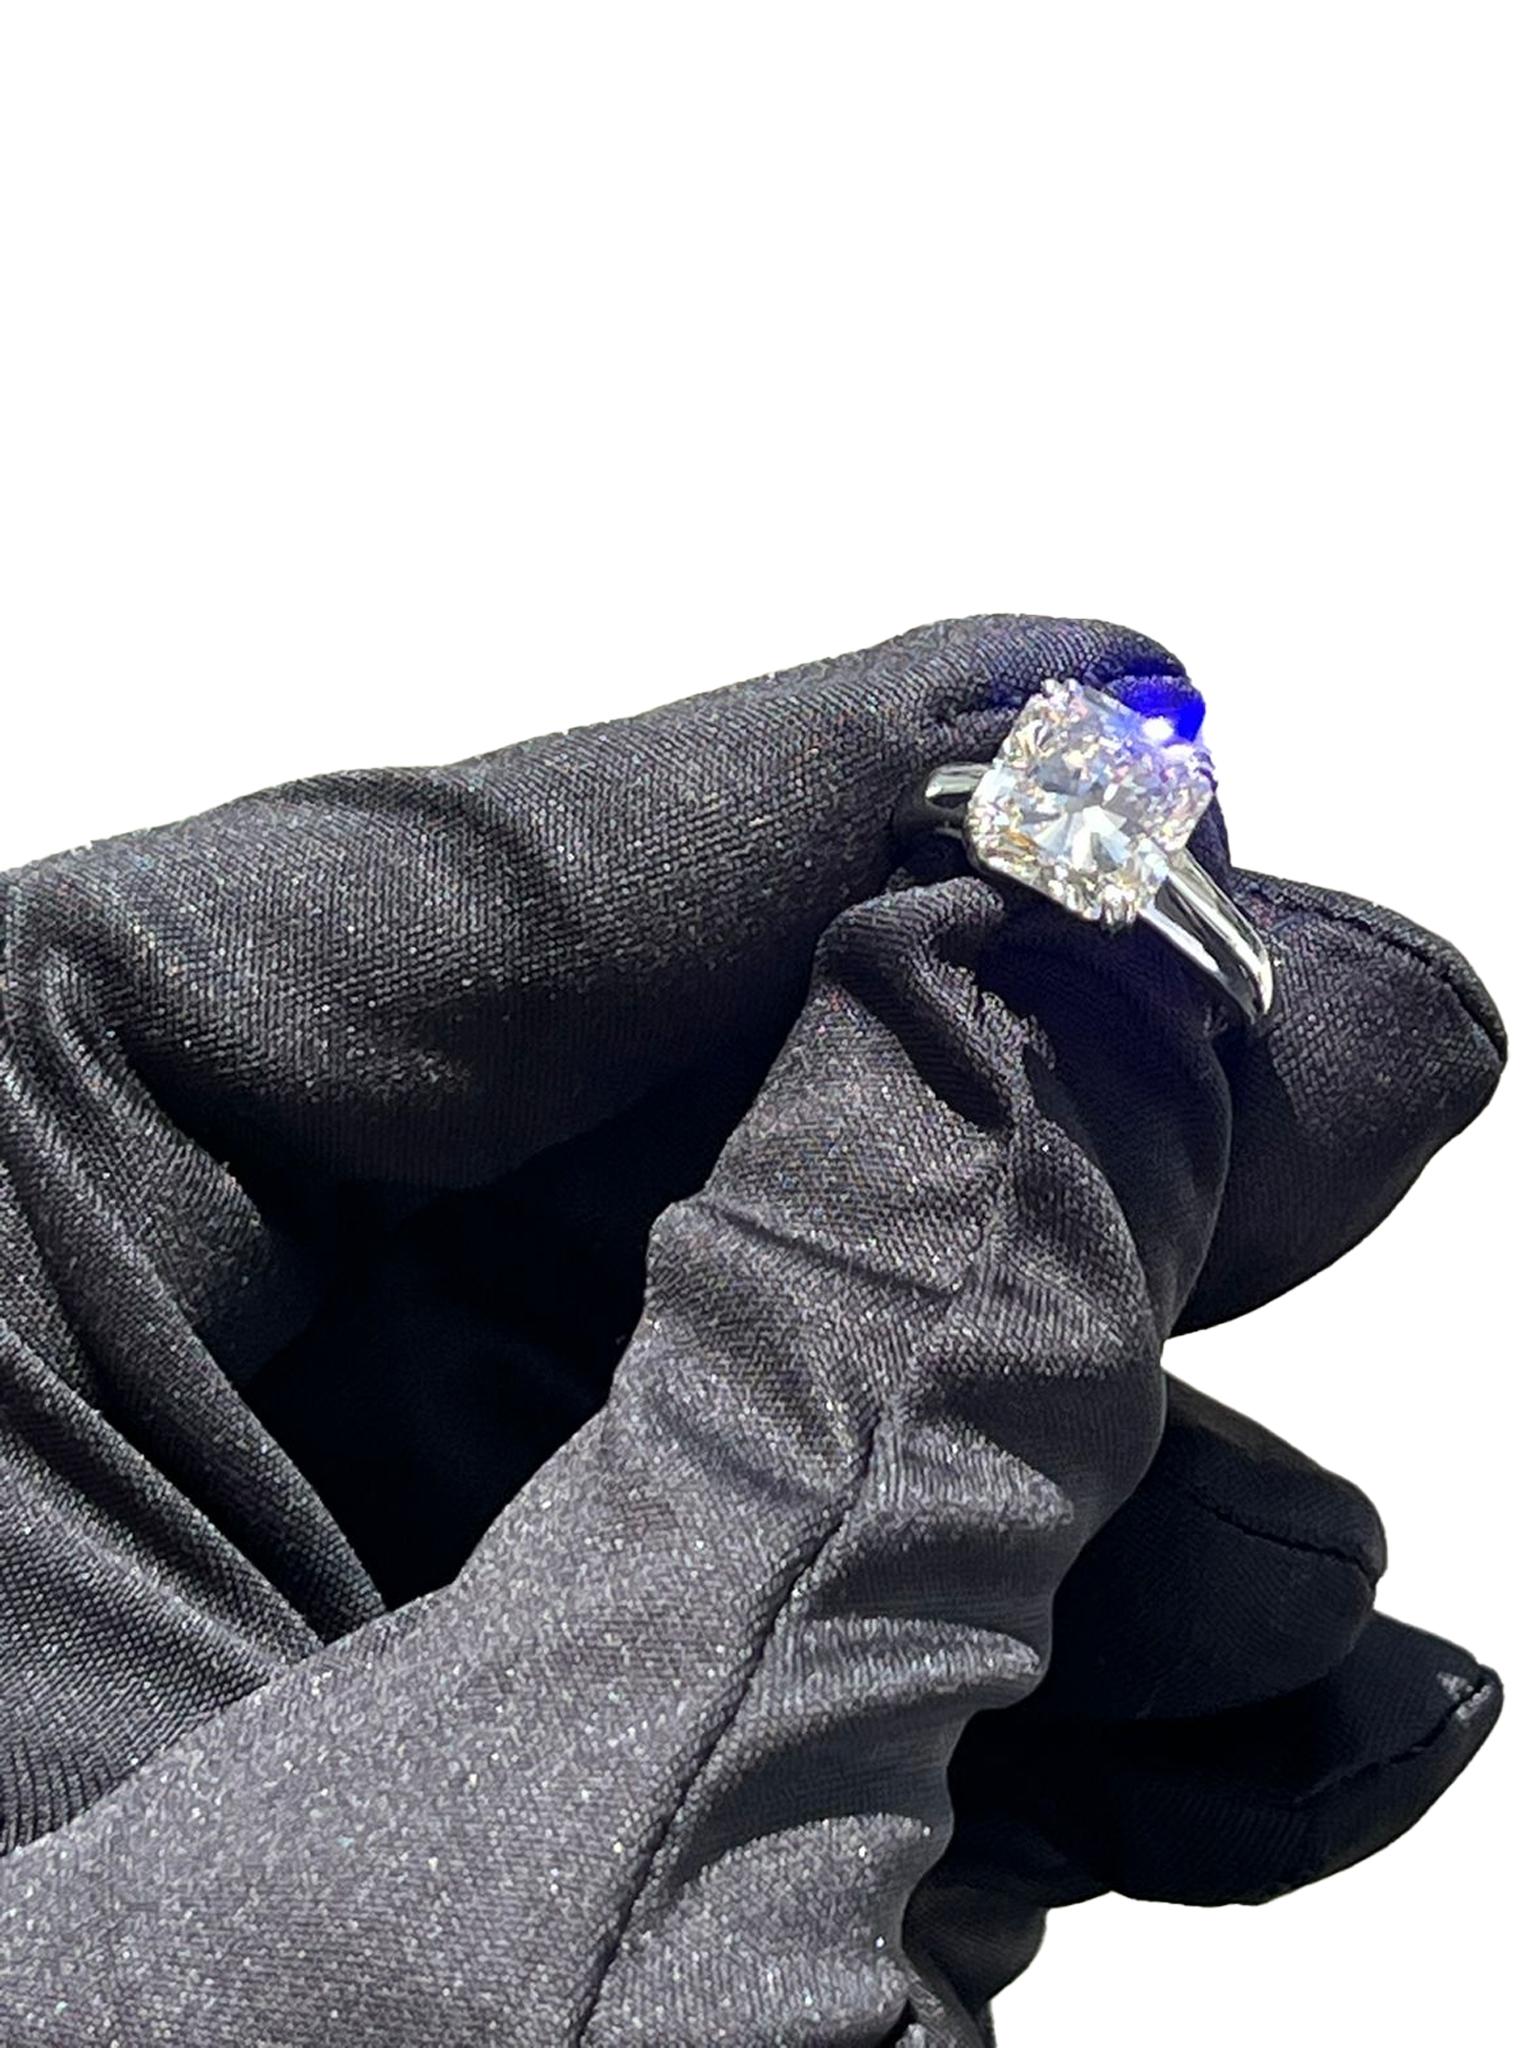 4.28 Carat Natural Square Radiant Cut Diamond Engagement Ring in Platinum For Sale 10